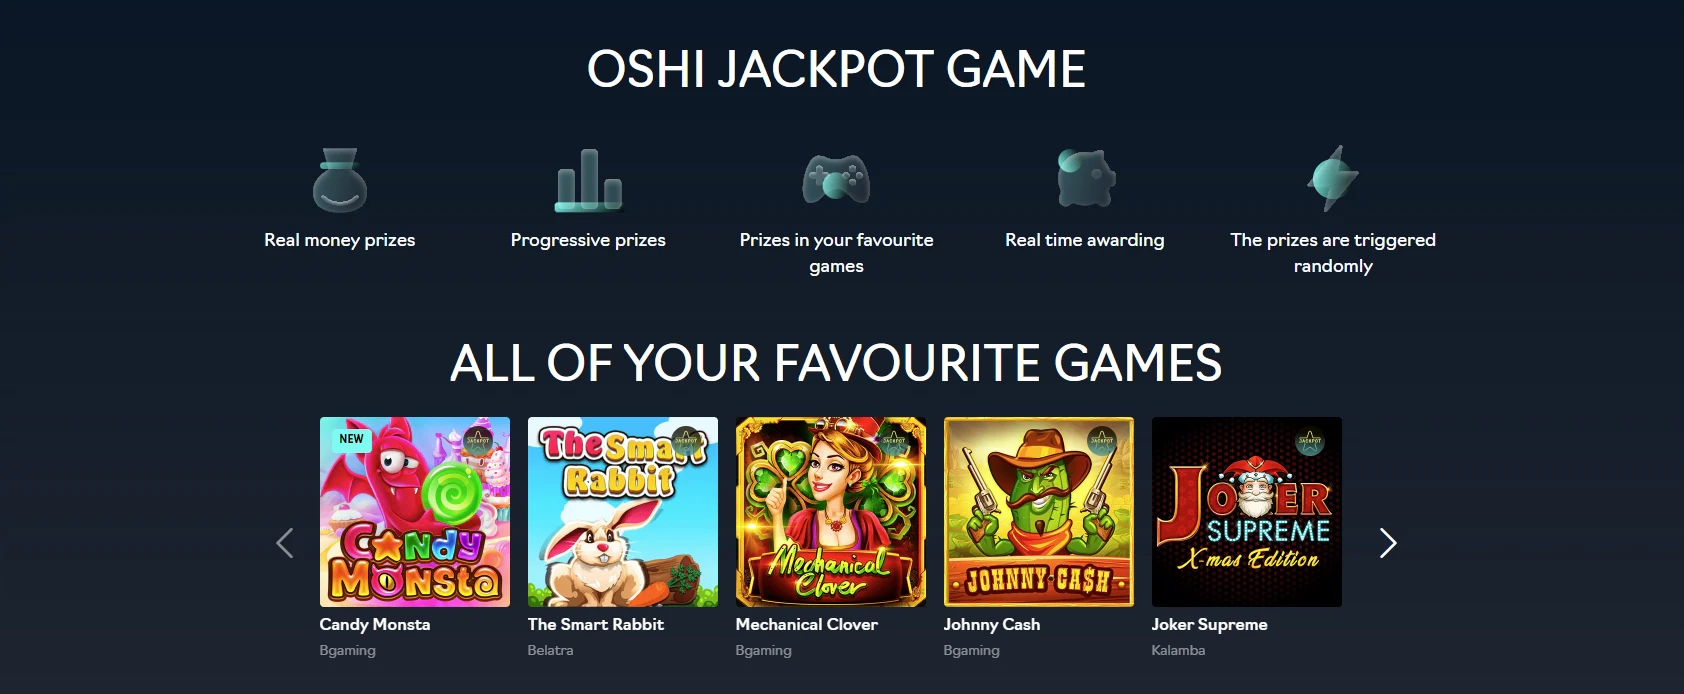 Oshi Jackpot Games